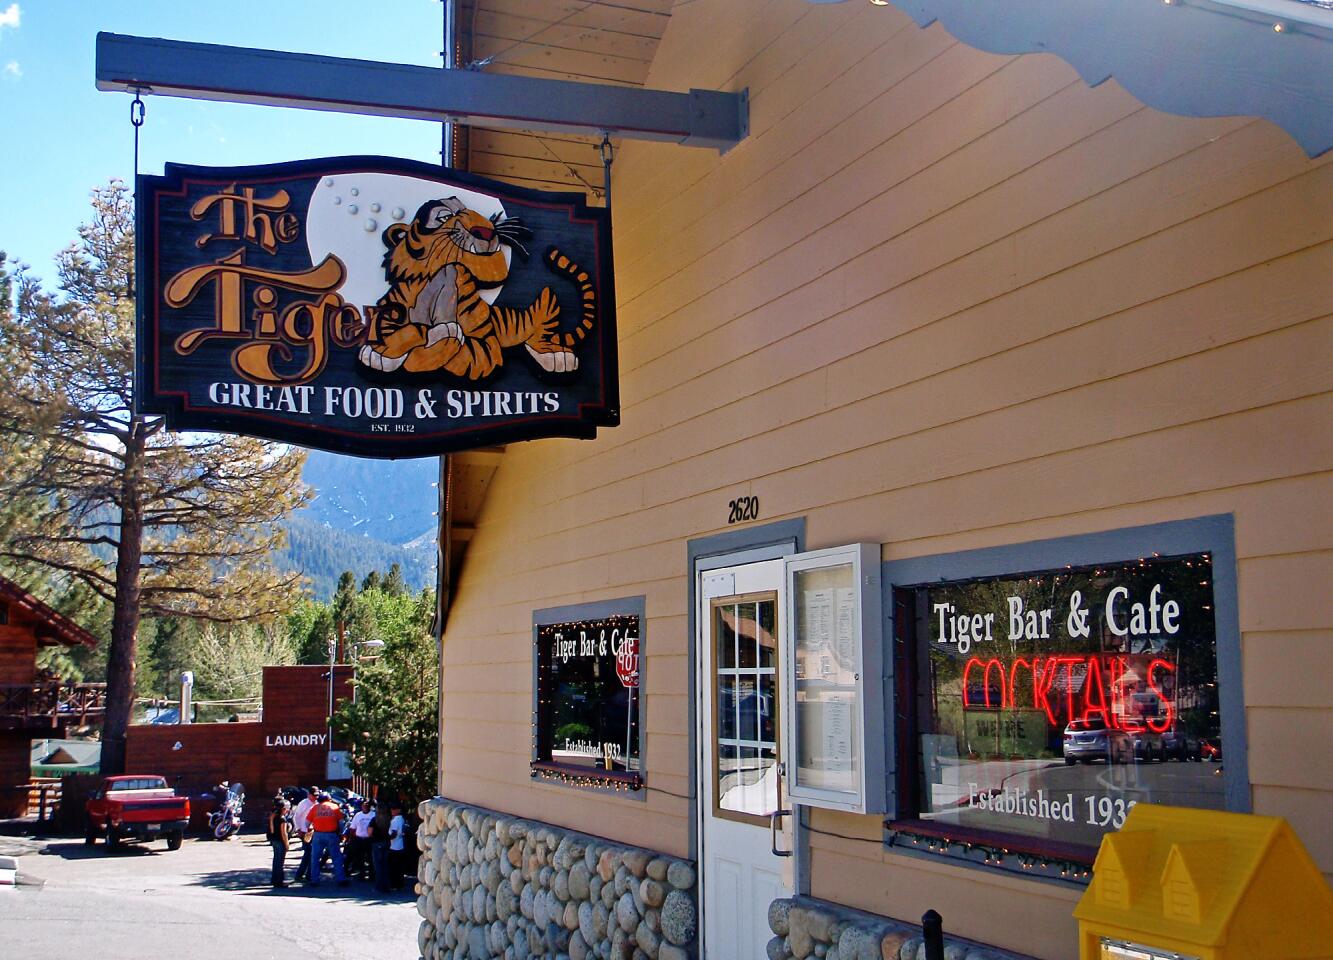 The Tiger Bar & Cafe